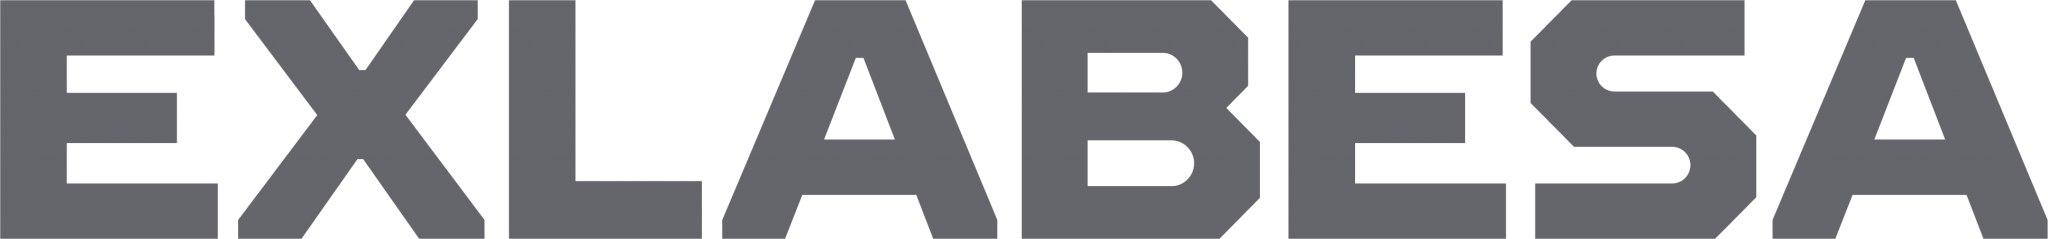 Exlabesa logo